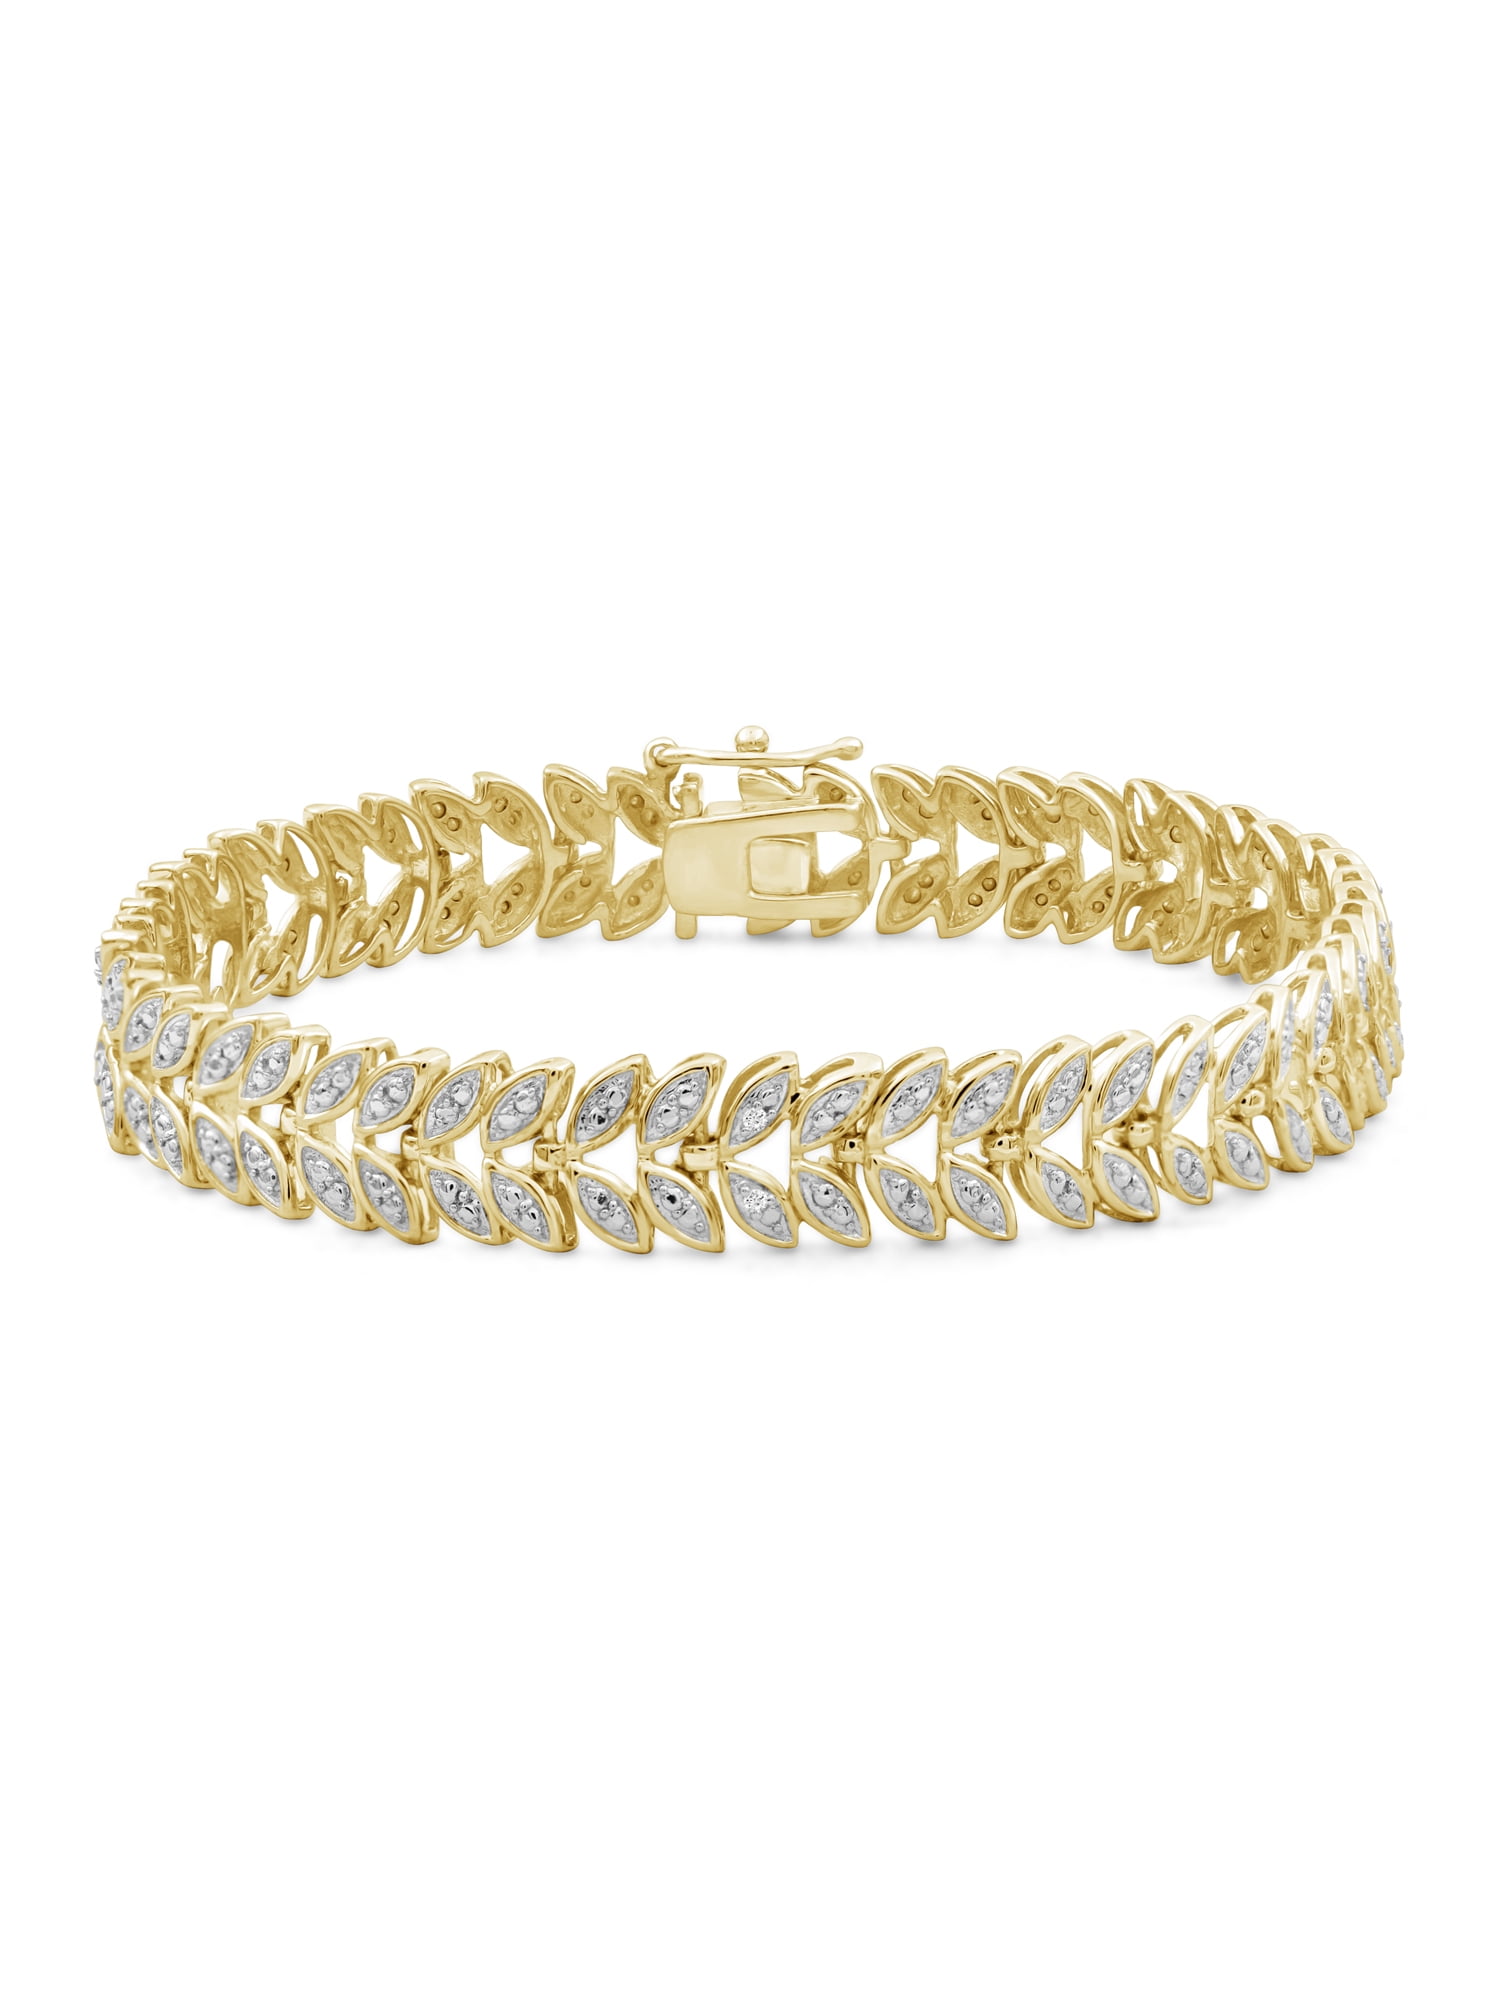 gold Kids cuff bracelet Girls cut out pattern metal bangle 3/4" wide 